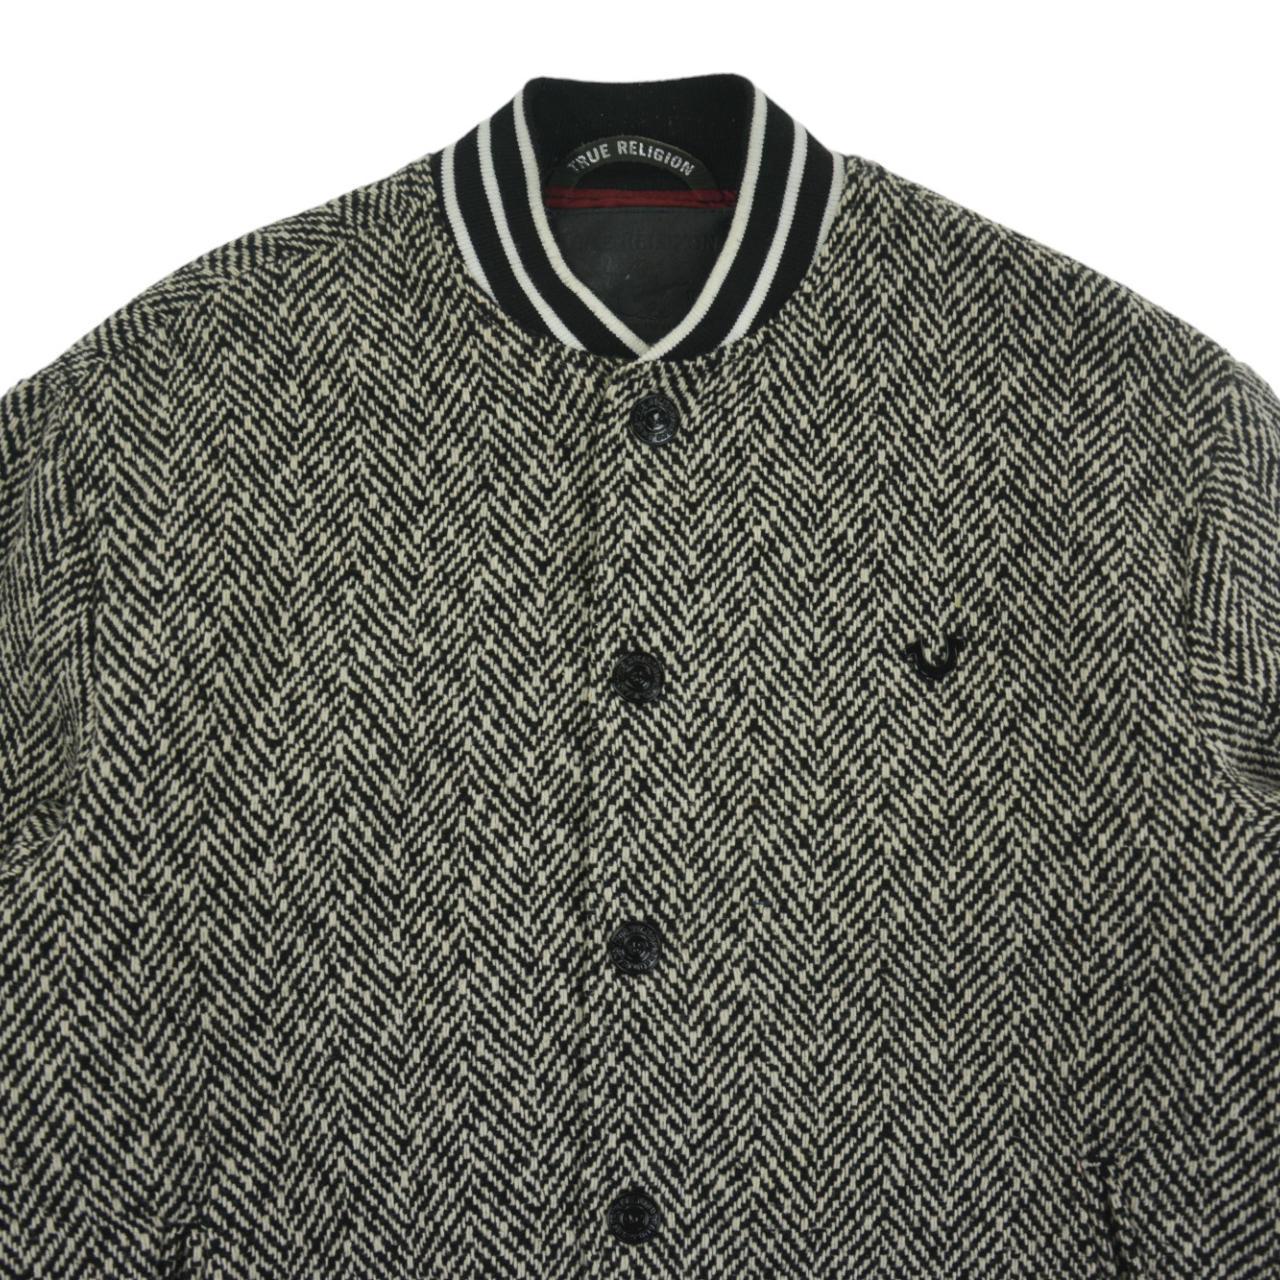 Vintage True Religion Tweed Wool Varsity Jacket Size M